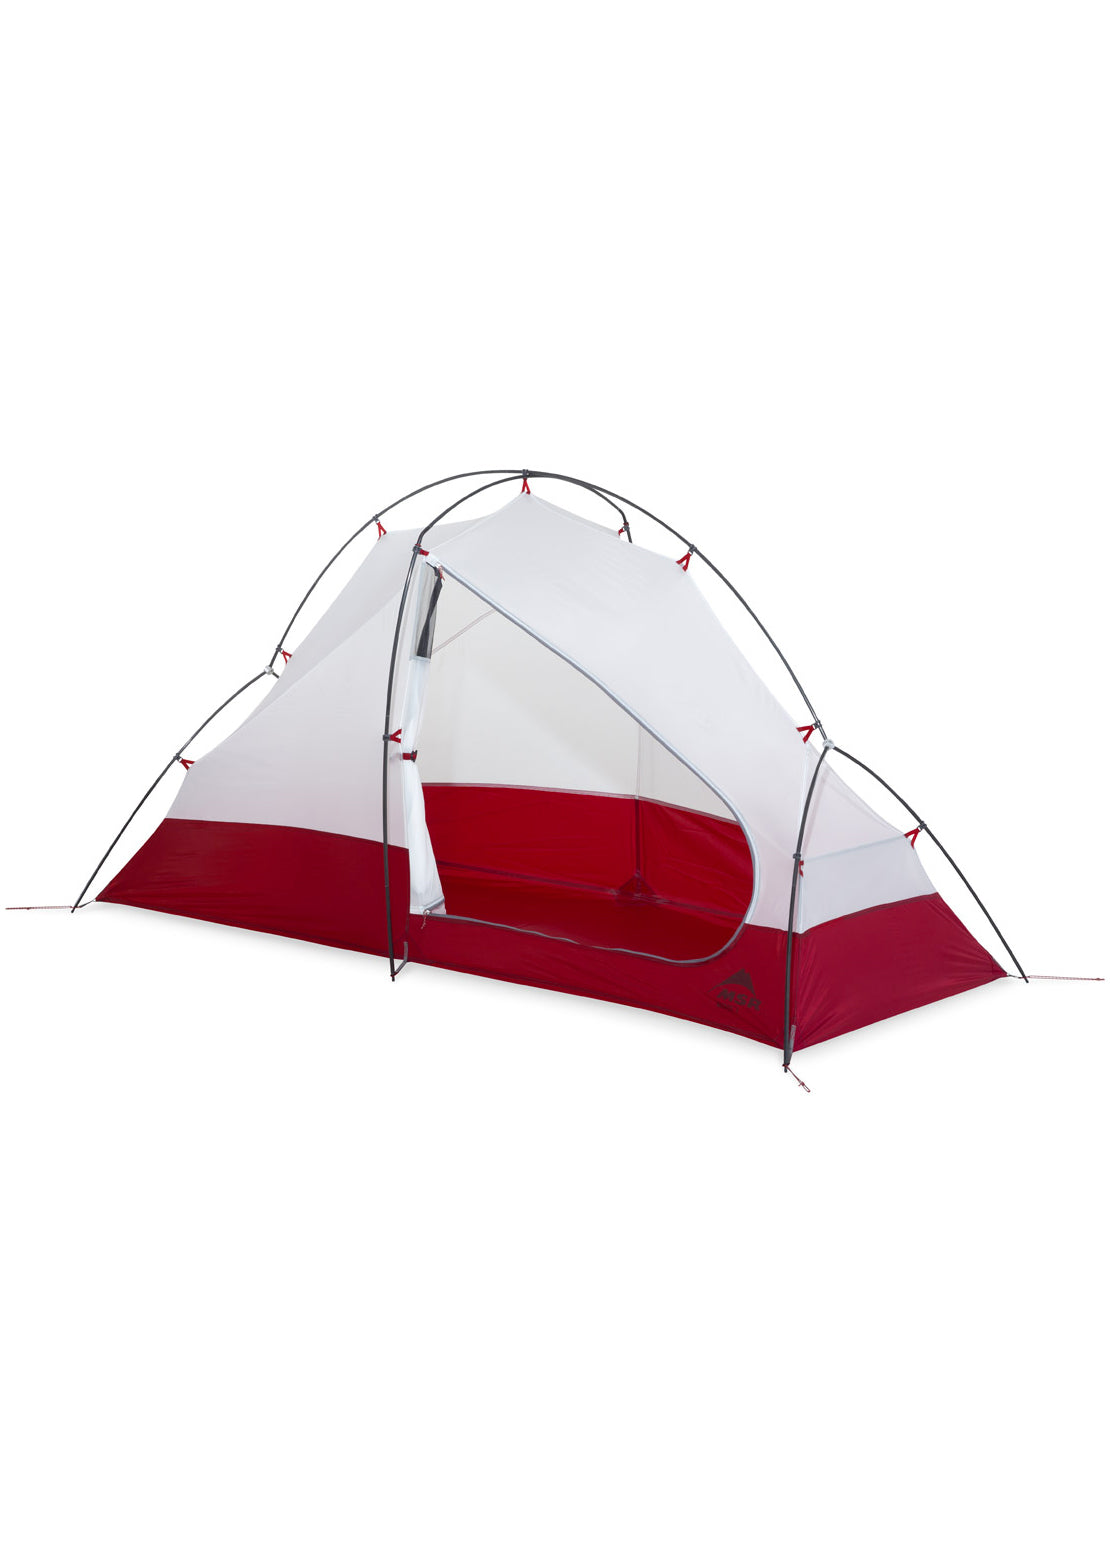 MSR Access 1 Ultralight Four Season Solo Tent